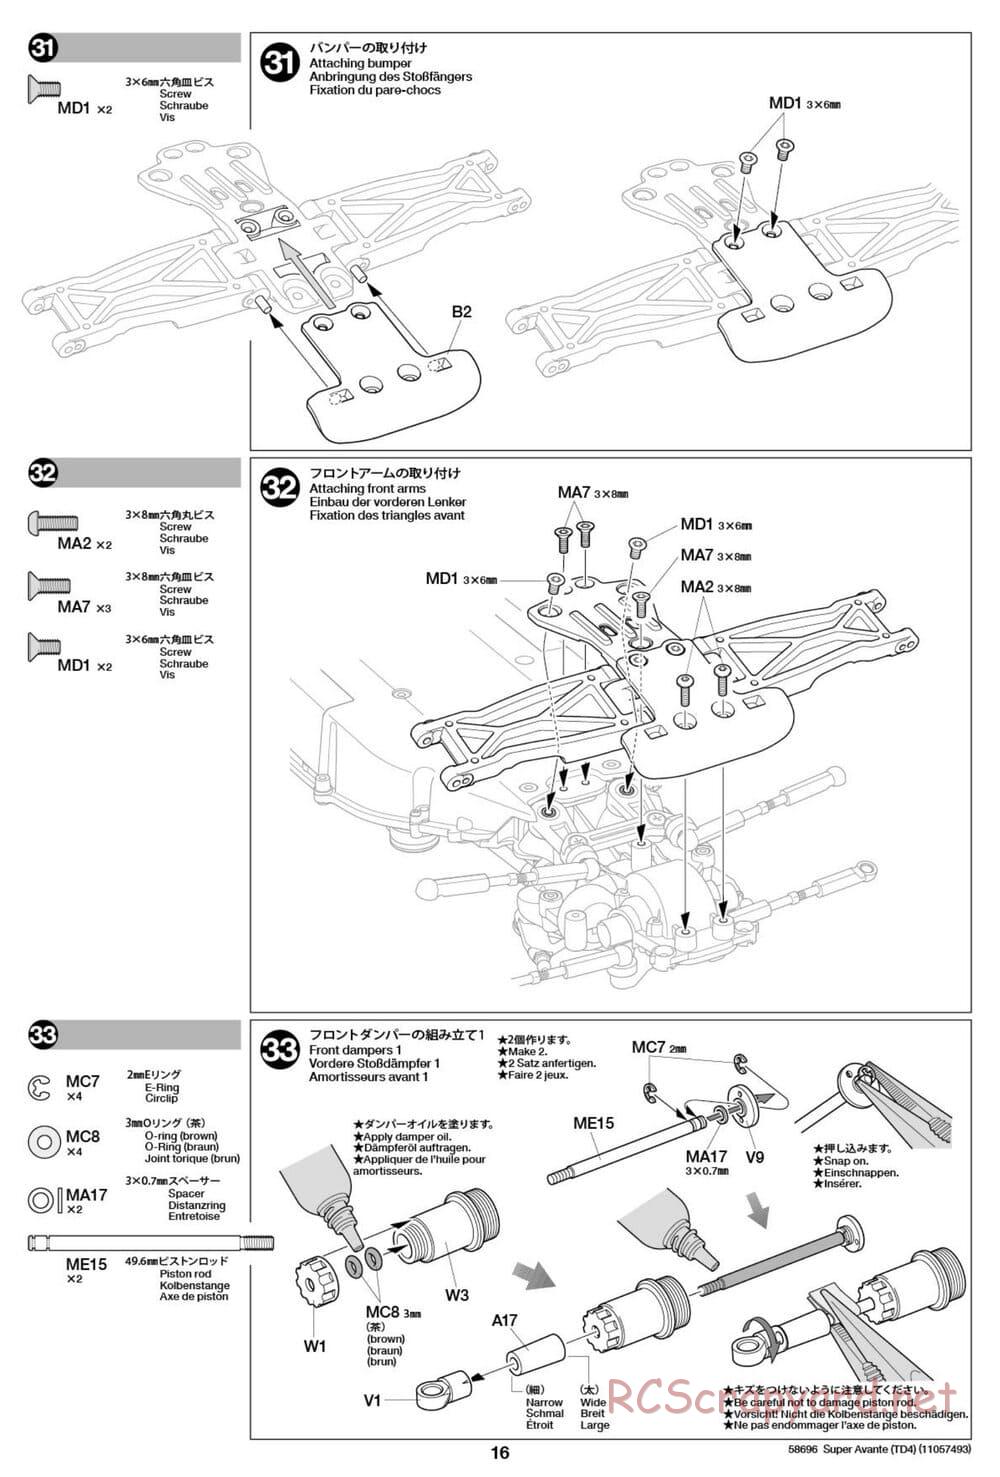 Tamiya - Super Avante - TD4 Chassis - Manual - Page 17